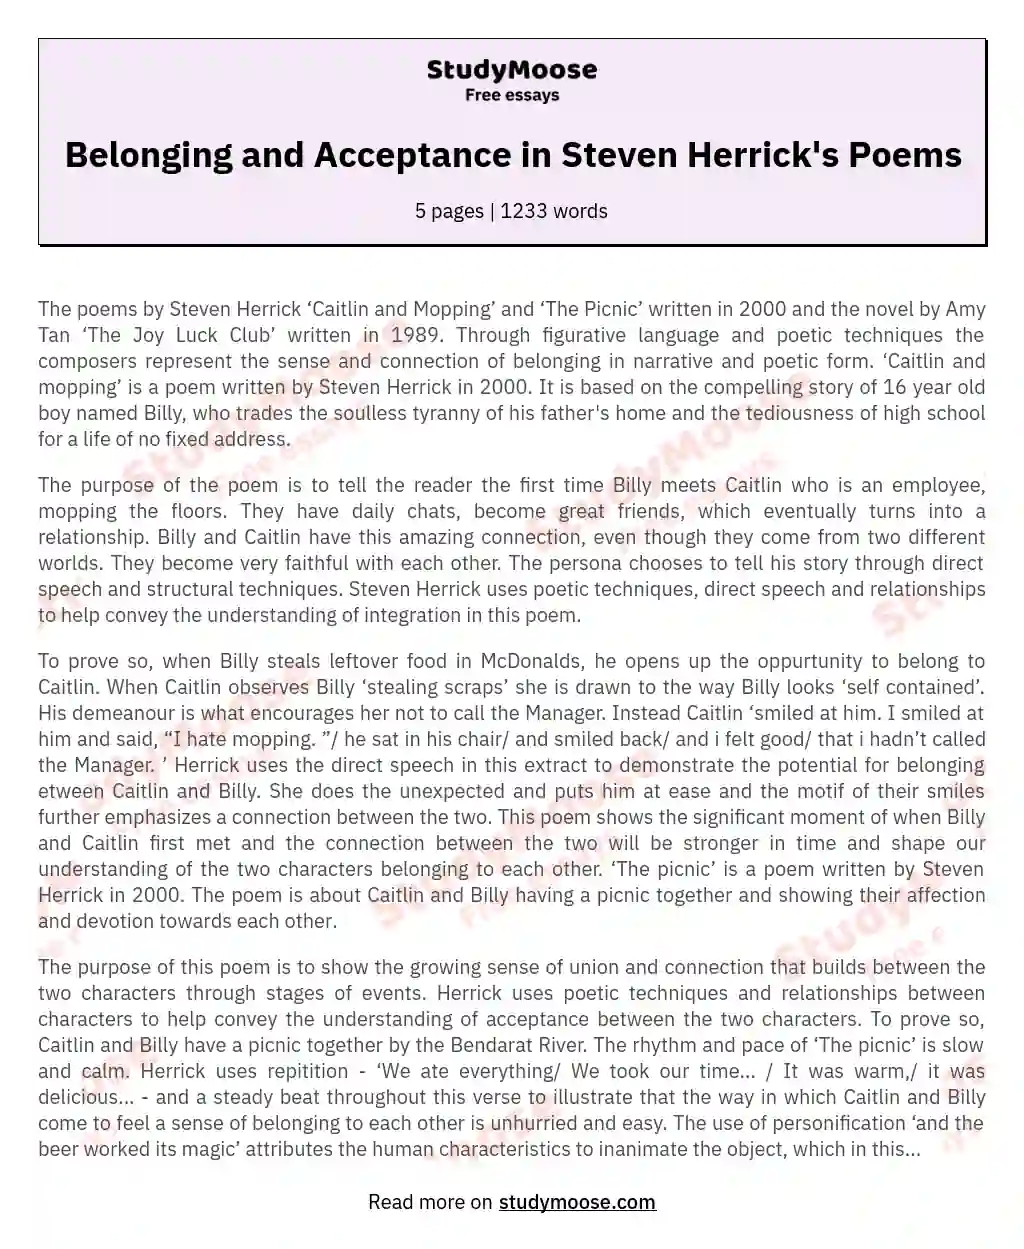 Belonging and Acceptance in Steven Herrick's Poems